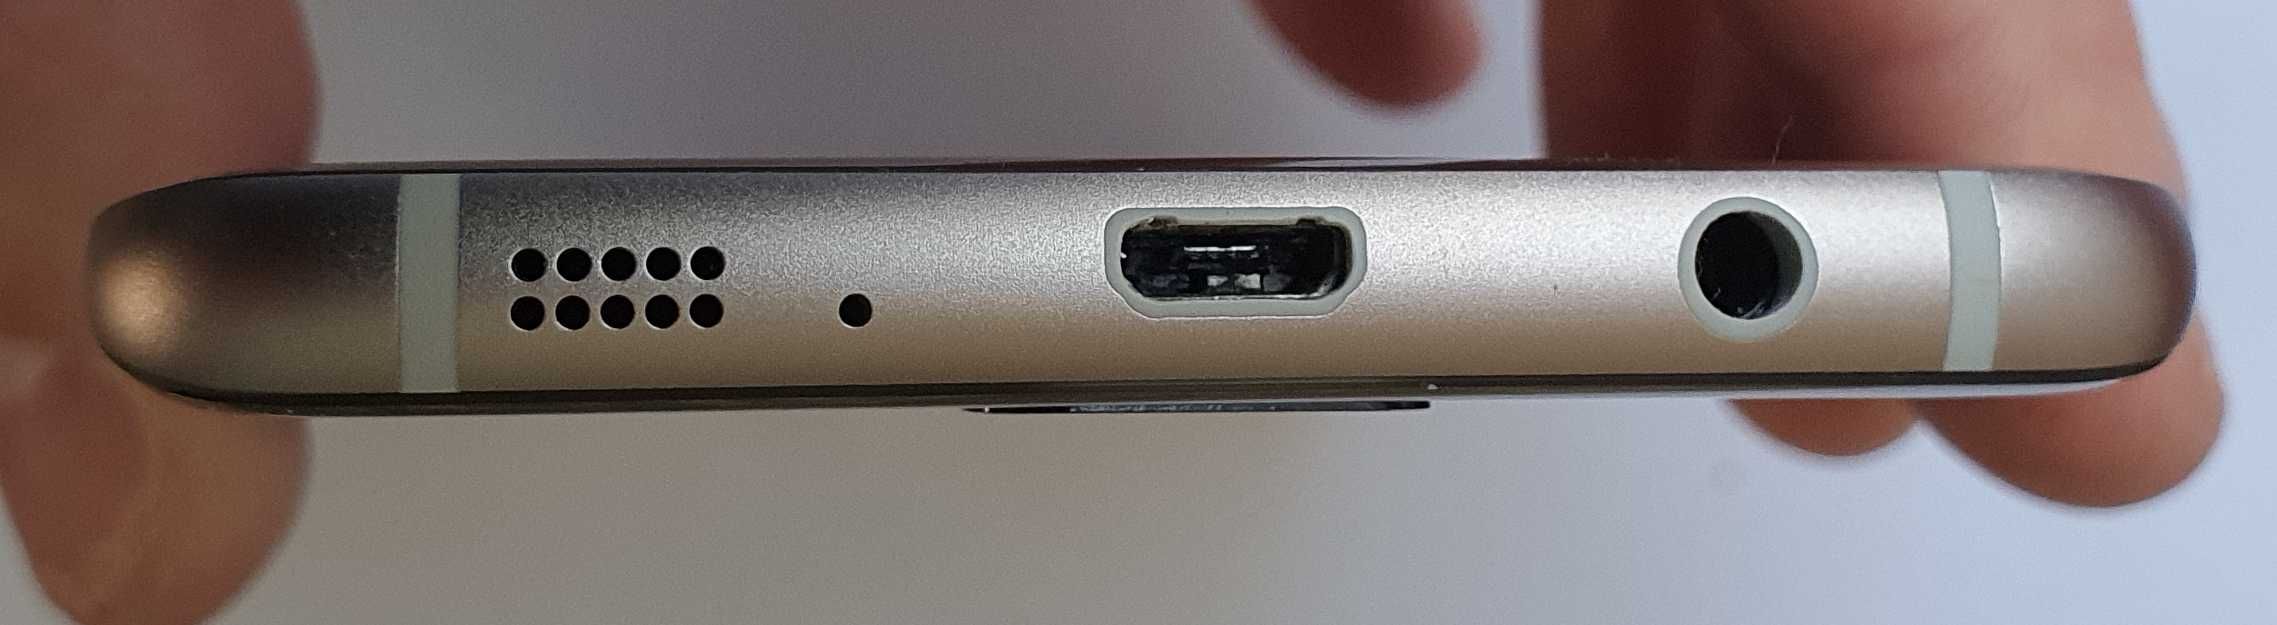 Samsung S7 Edge 4/32